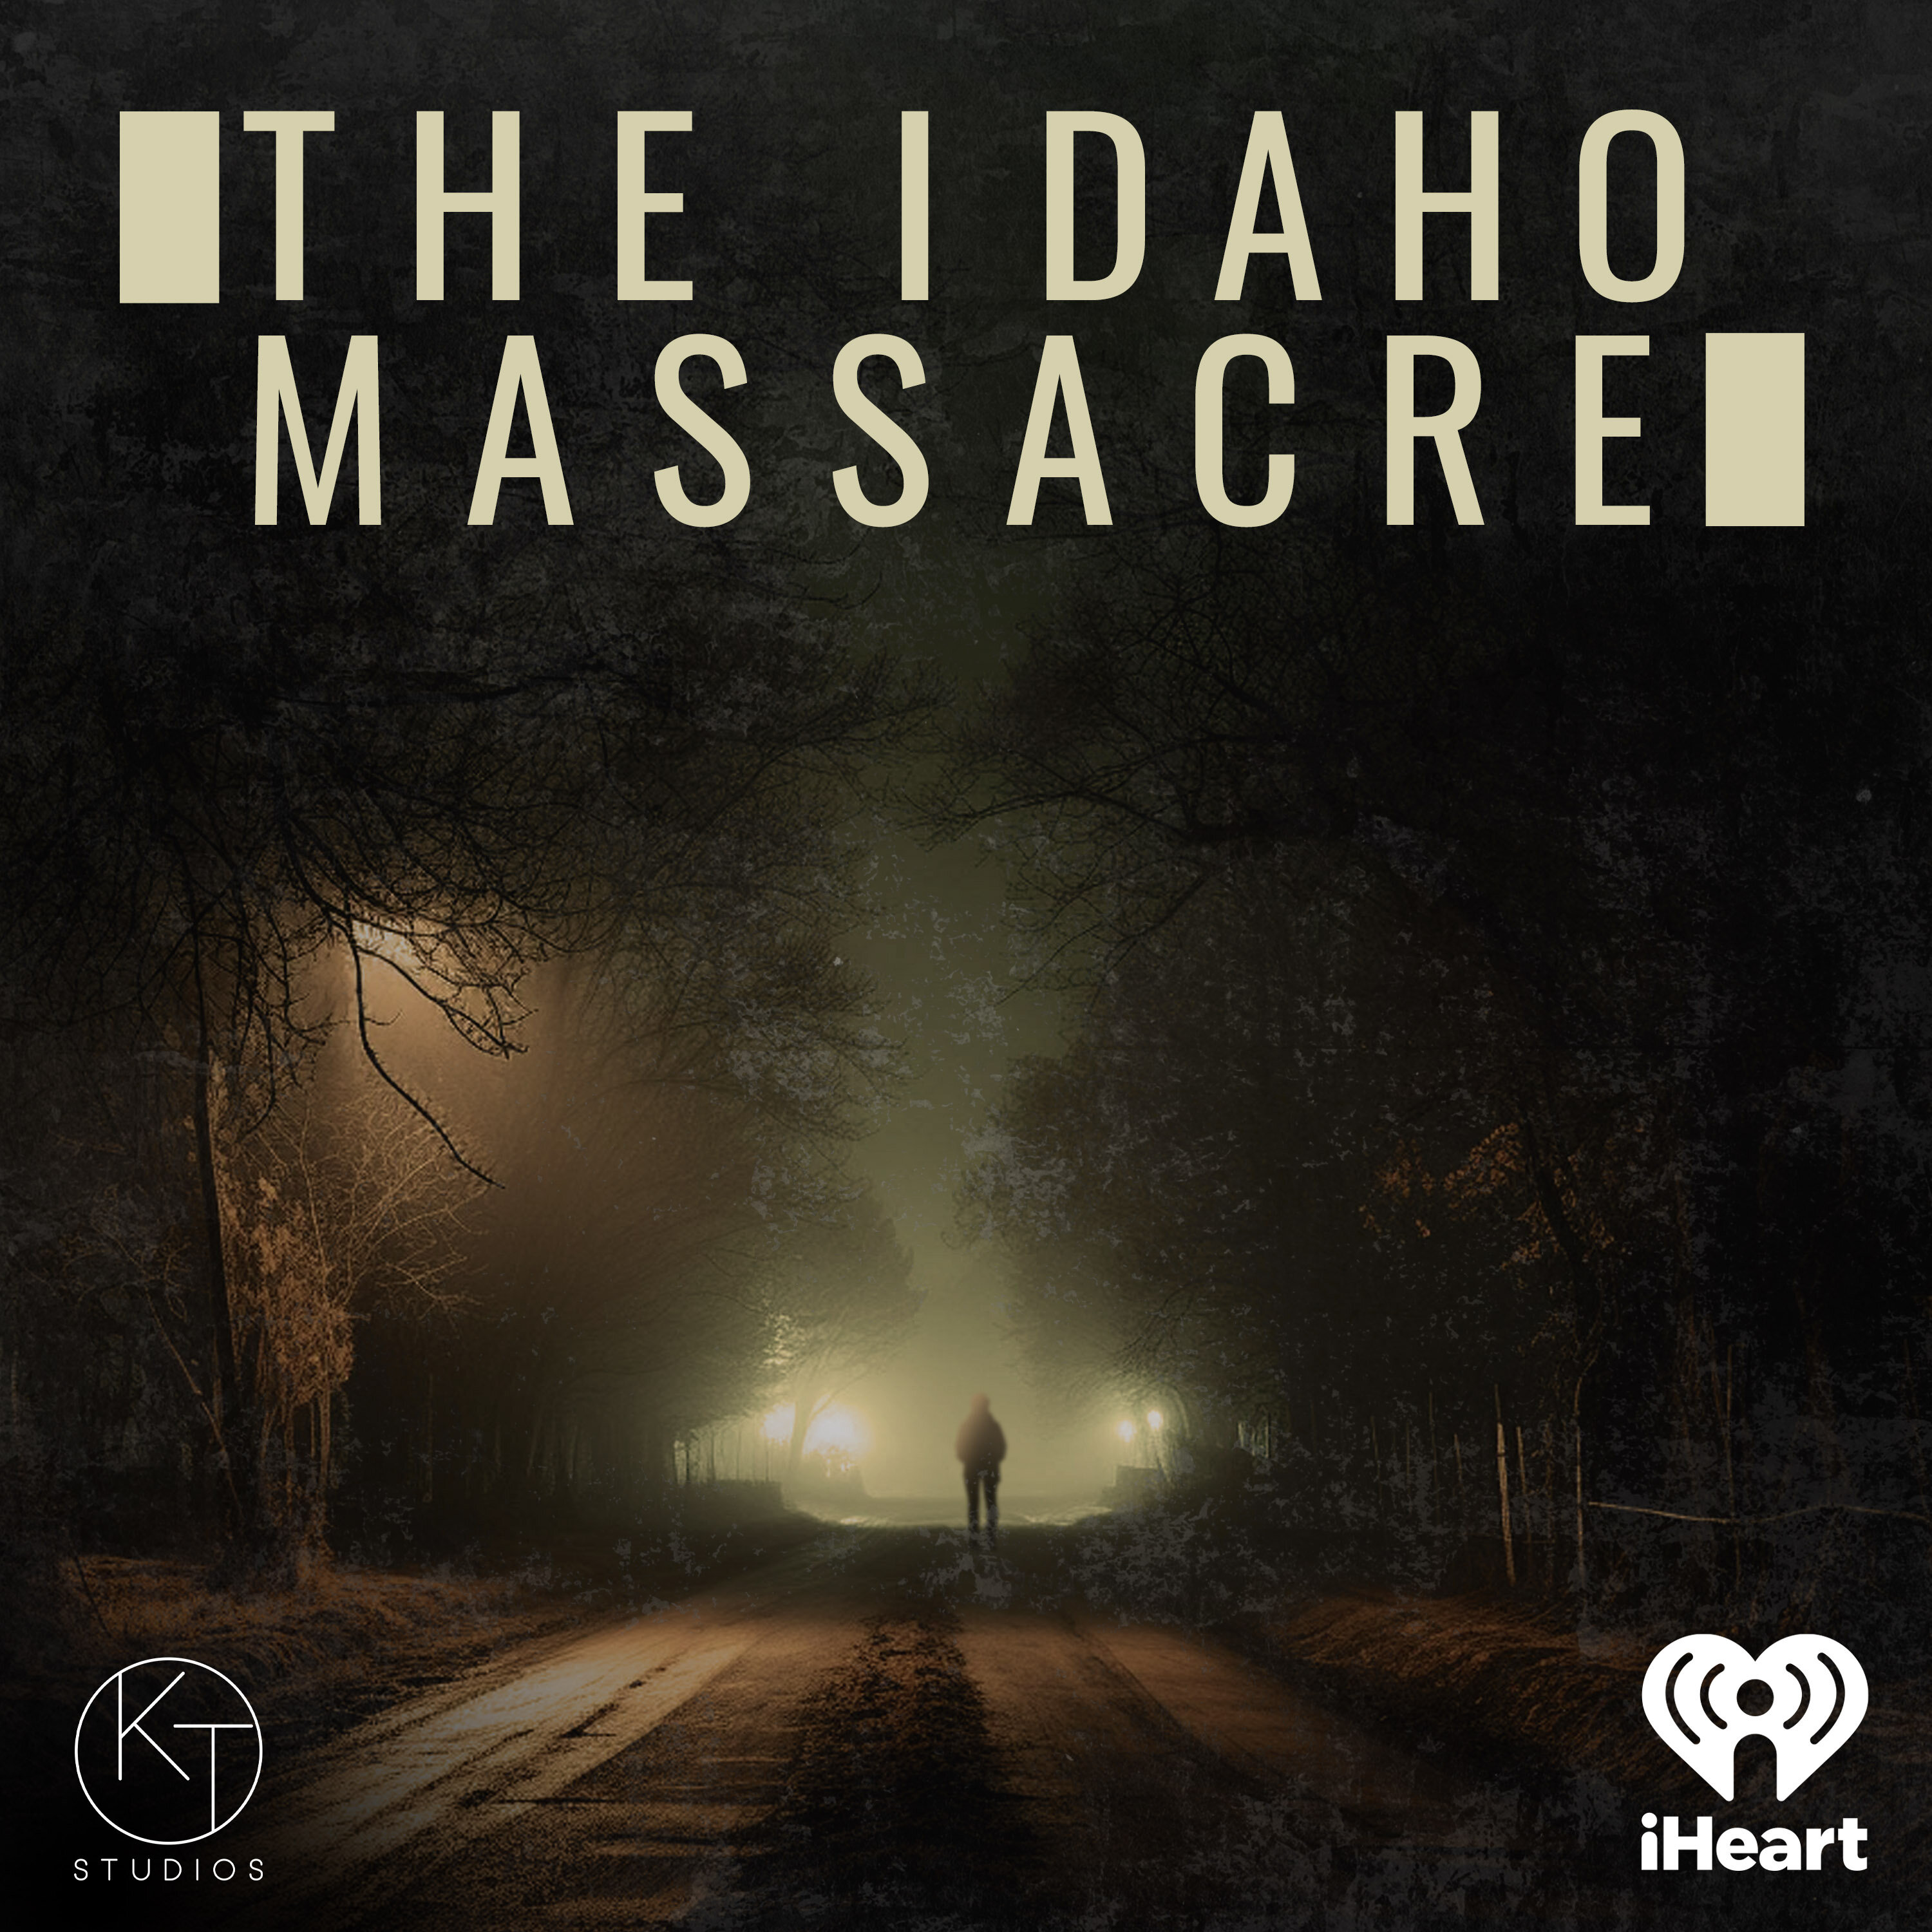 The Piketon Massacre:iHeartPodcasts